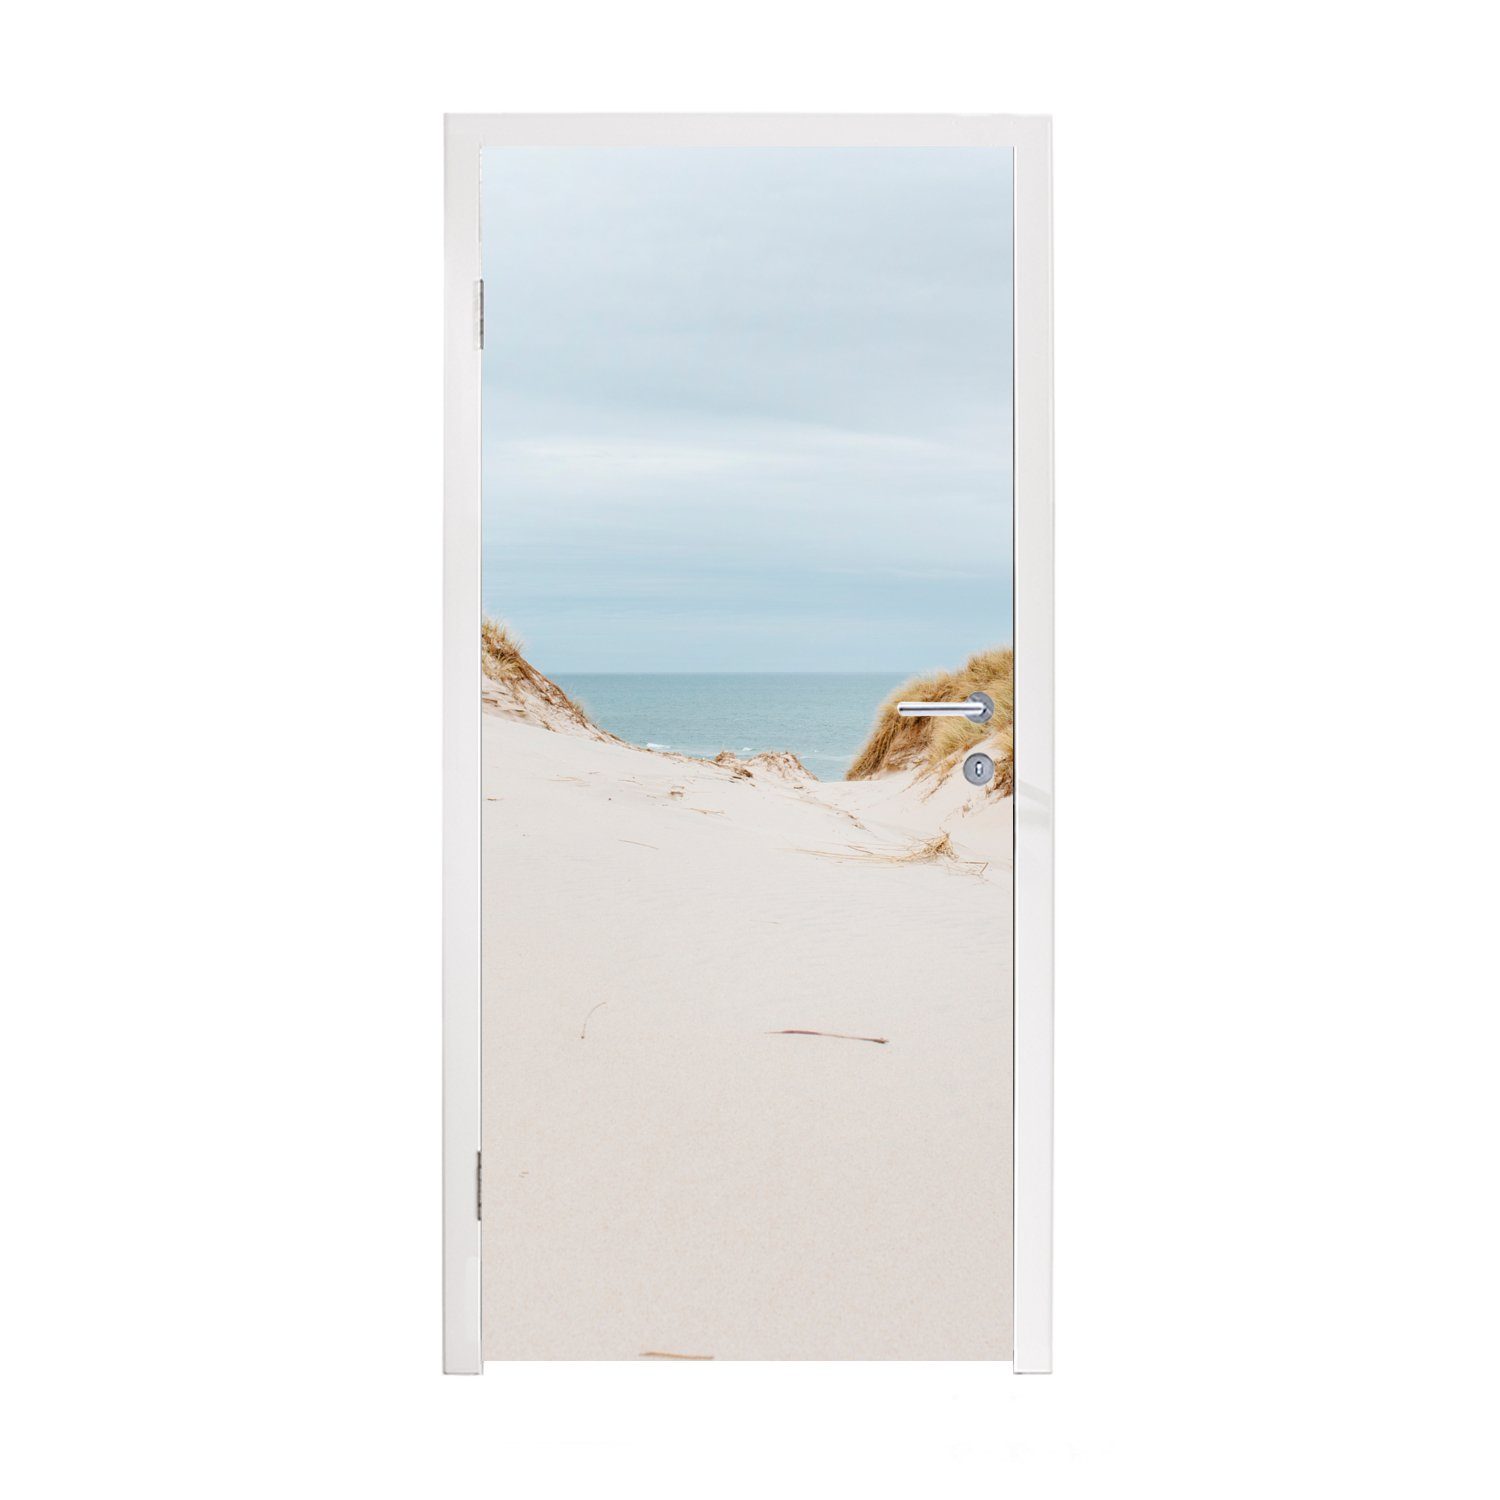 MuchoWow Türtapete Das Meer hinter den Dünen, Matt, bedruckt, (1 St), Fototapete für Tür, Türaufkleber, 75x205 cm